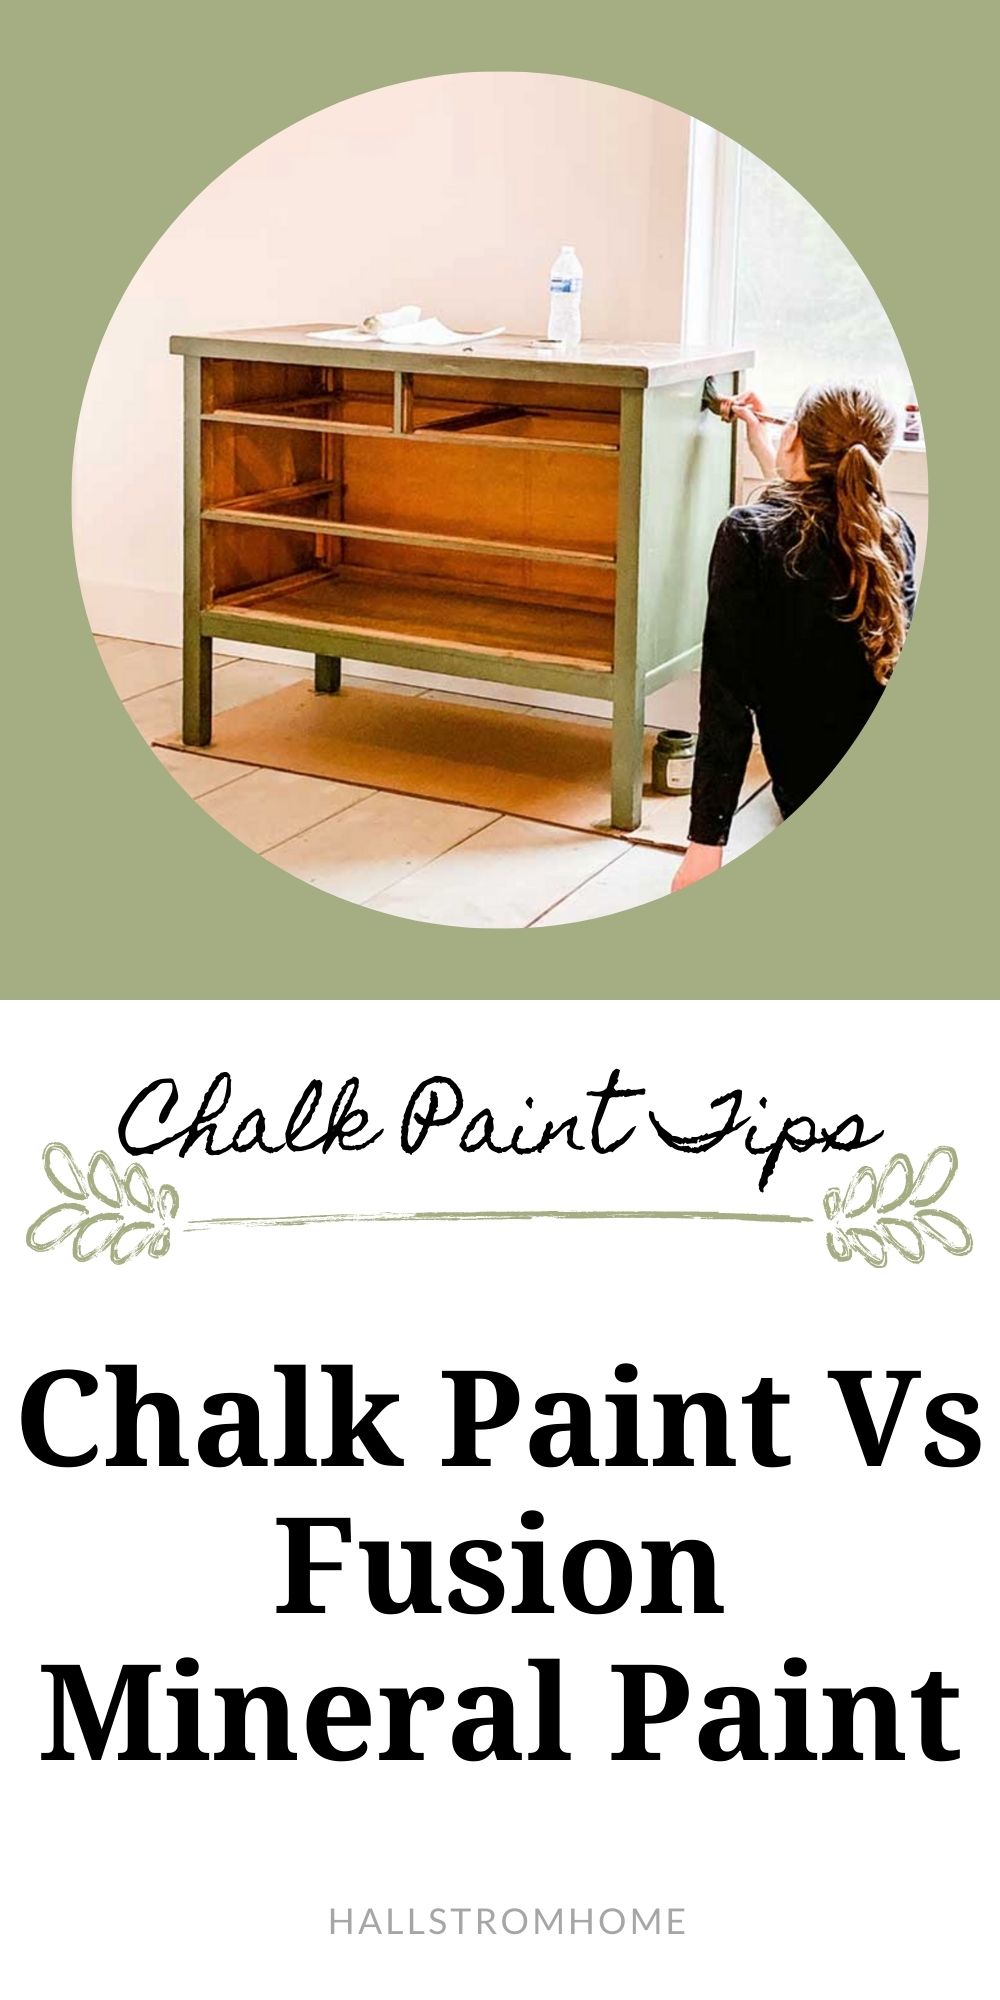 Why Use Chalk Paint Vs Regular Paint?